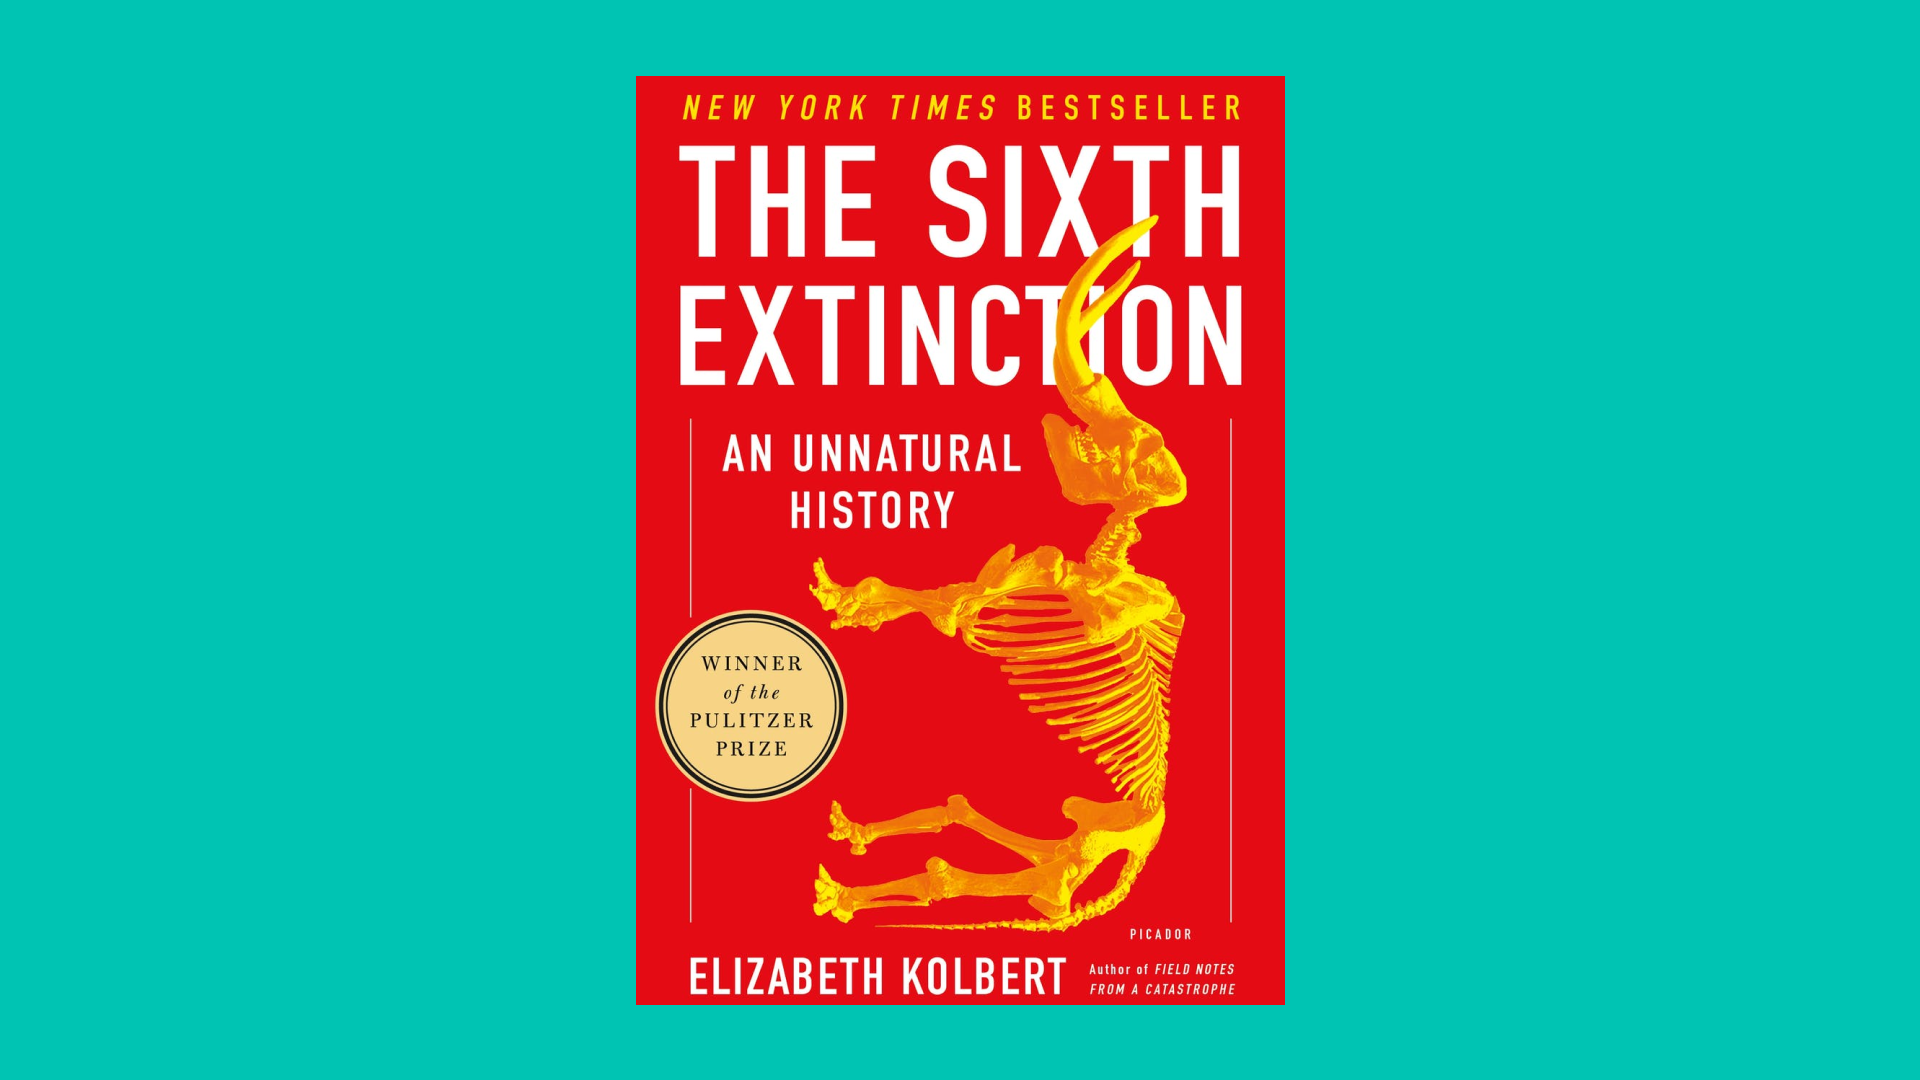 “The Sixth Extinction” by Elizabeth Kolbert